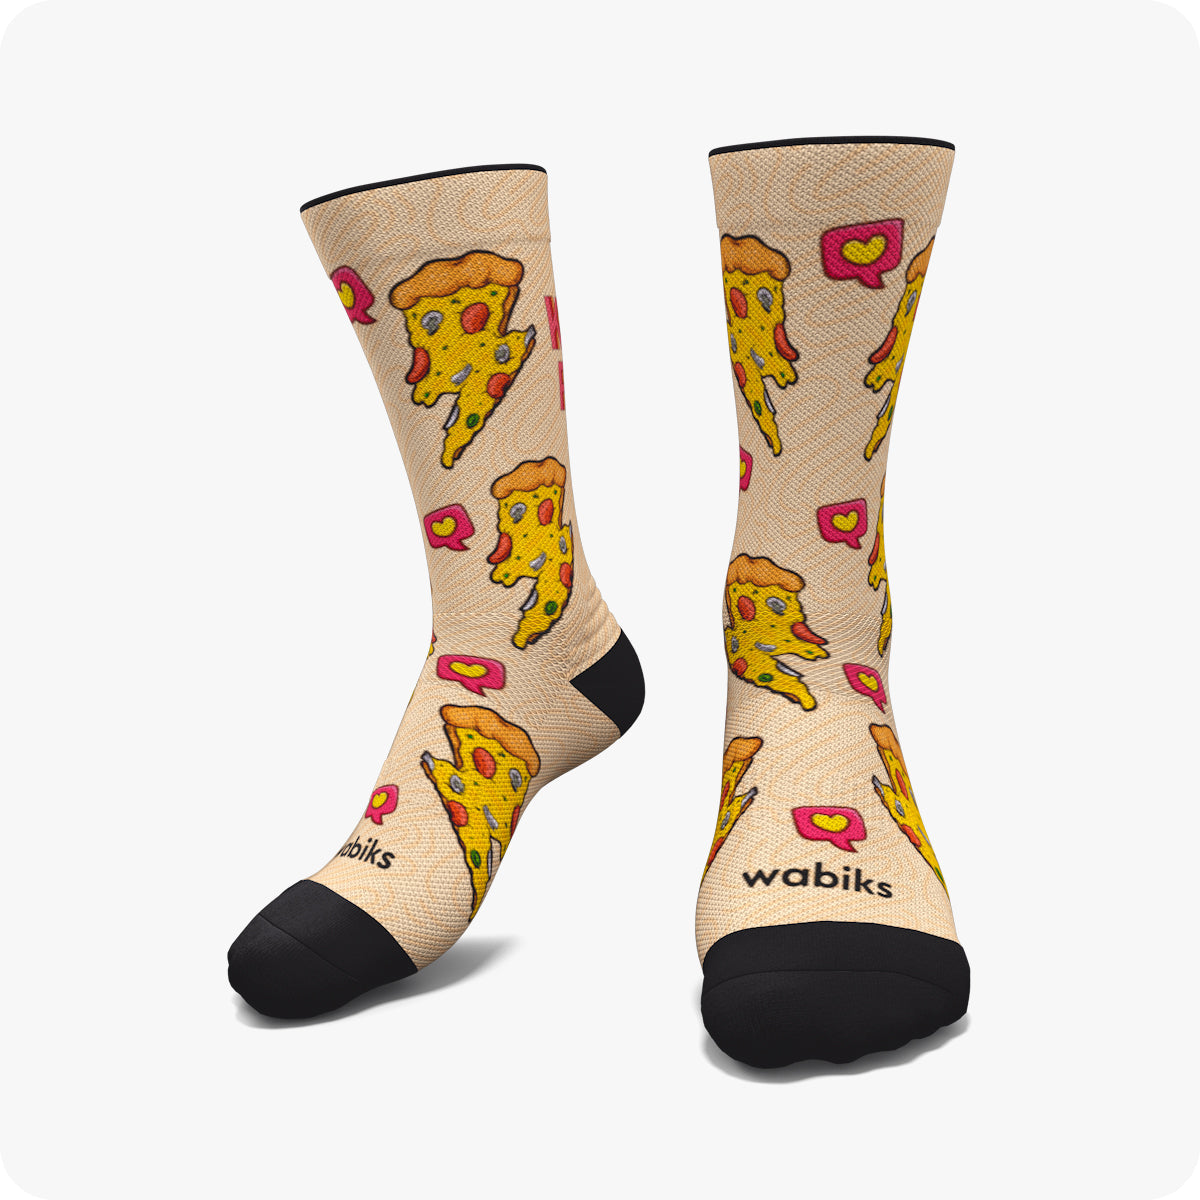 En riesgo Red de comunicacion cosecha Pizza Socks - Wabiks